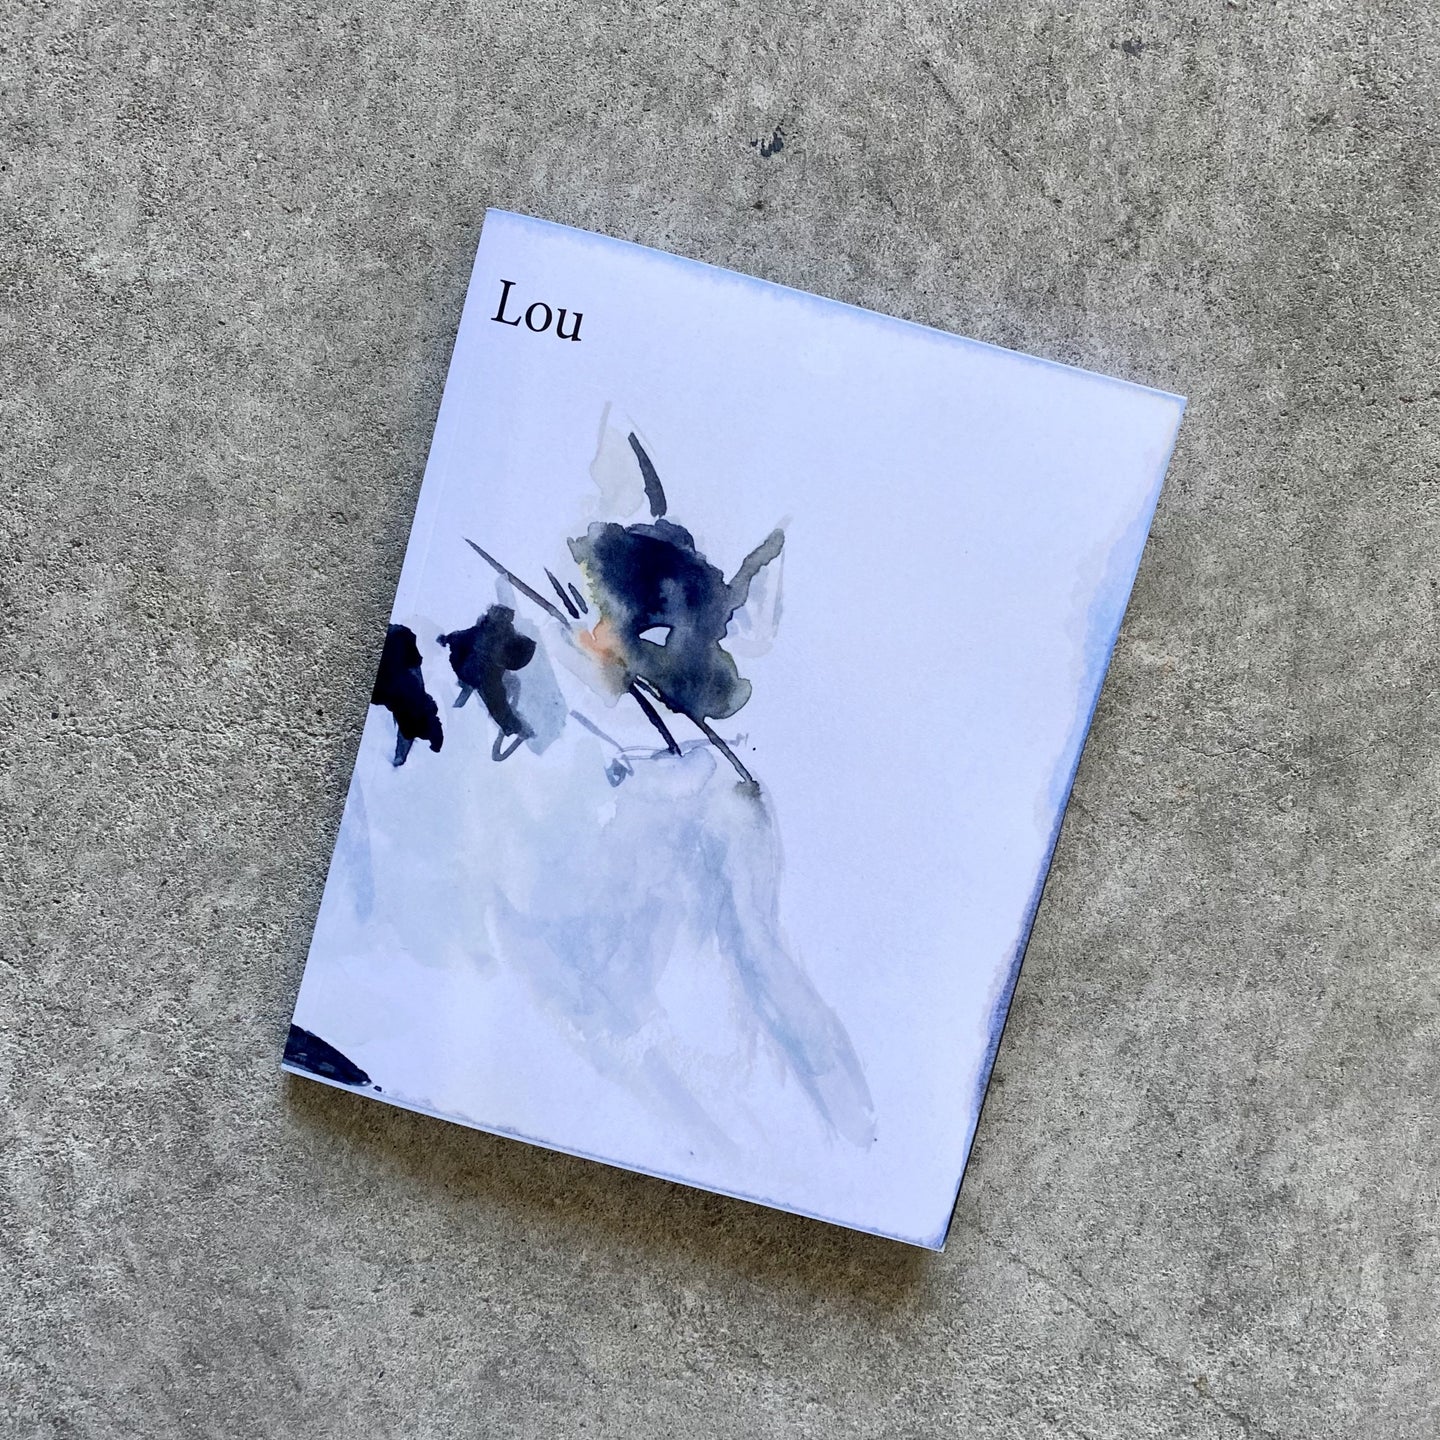 Lou Lou: 2005-2020